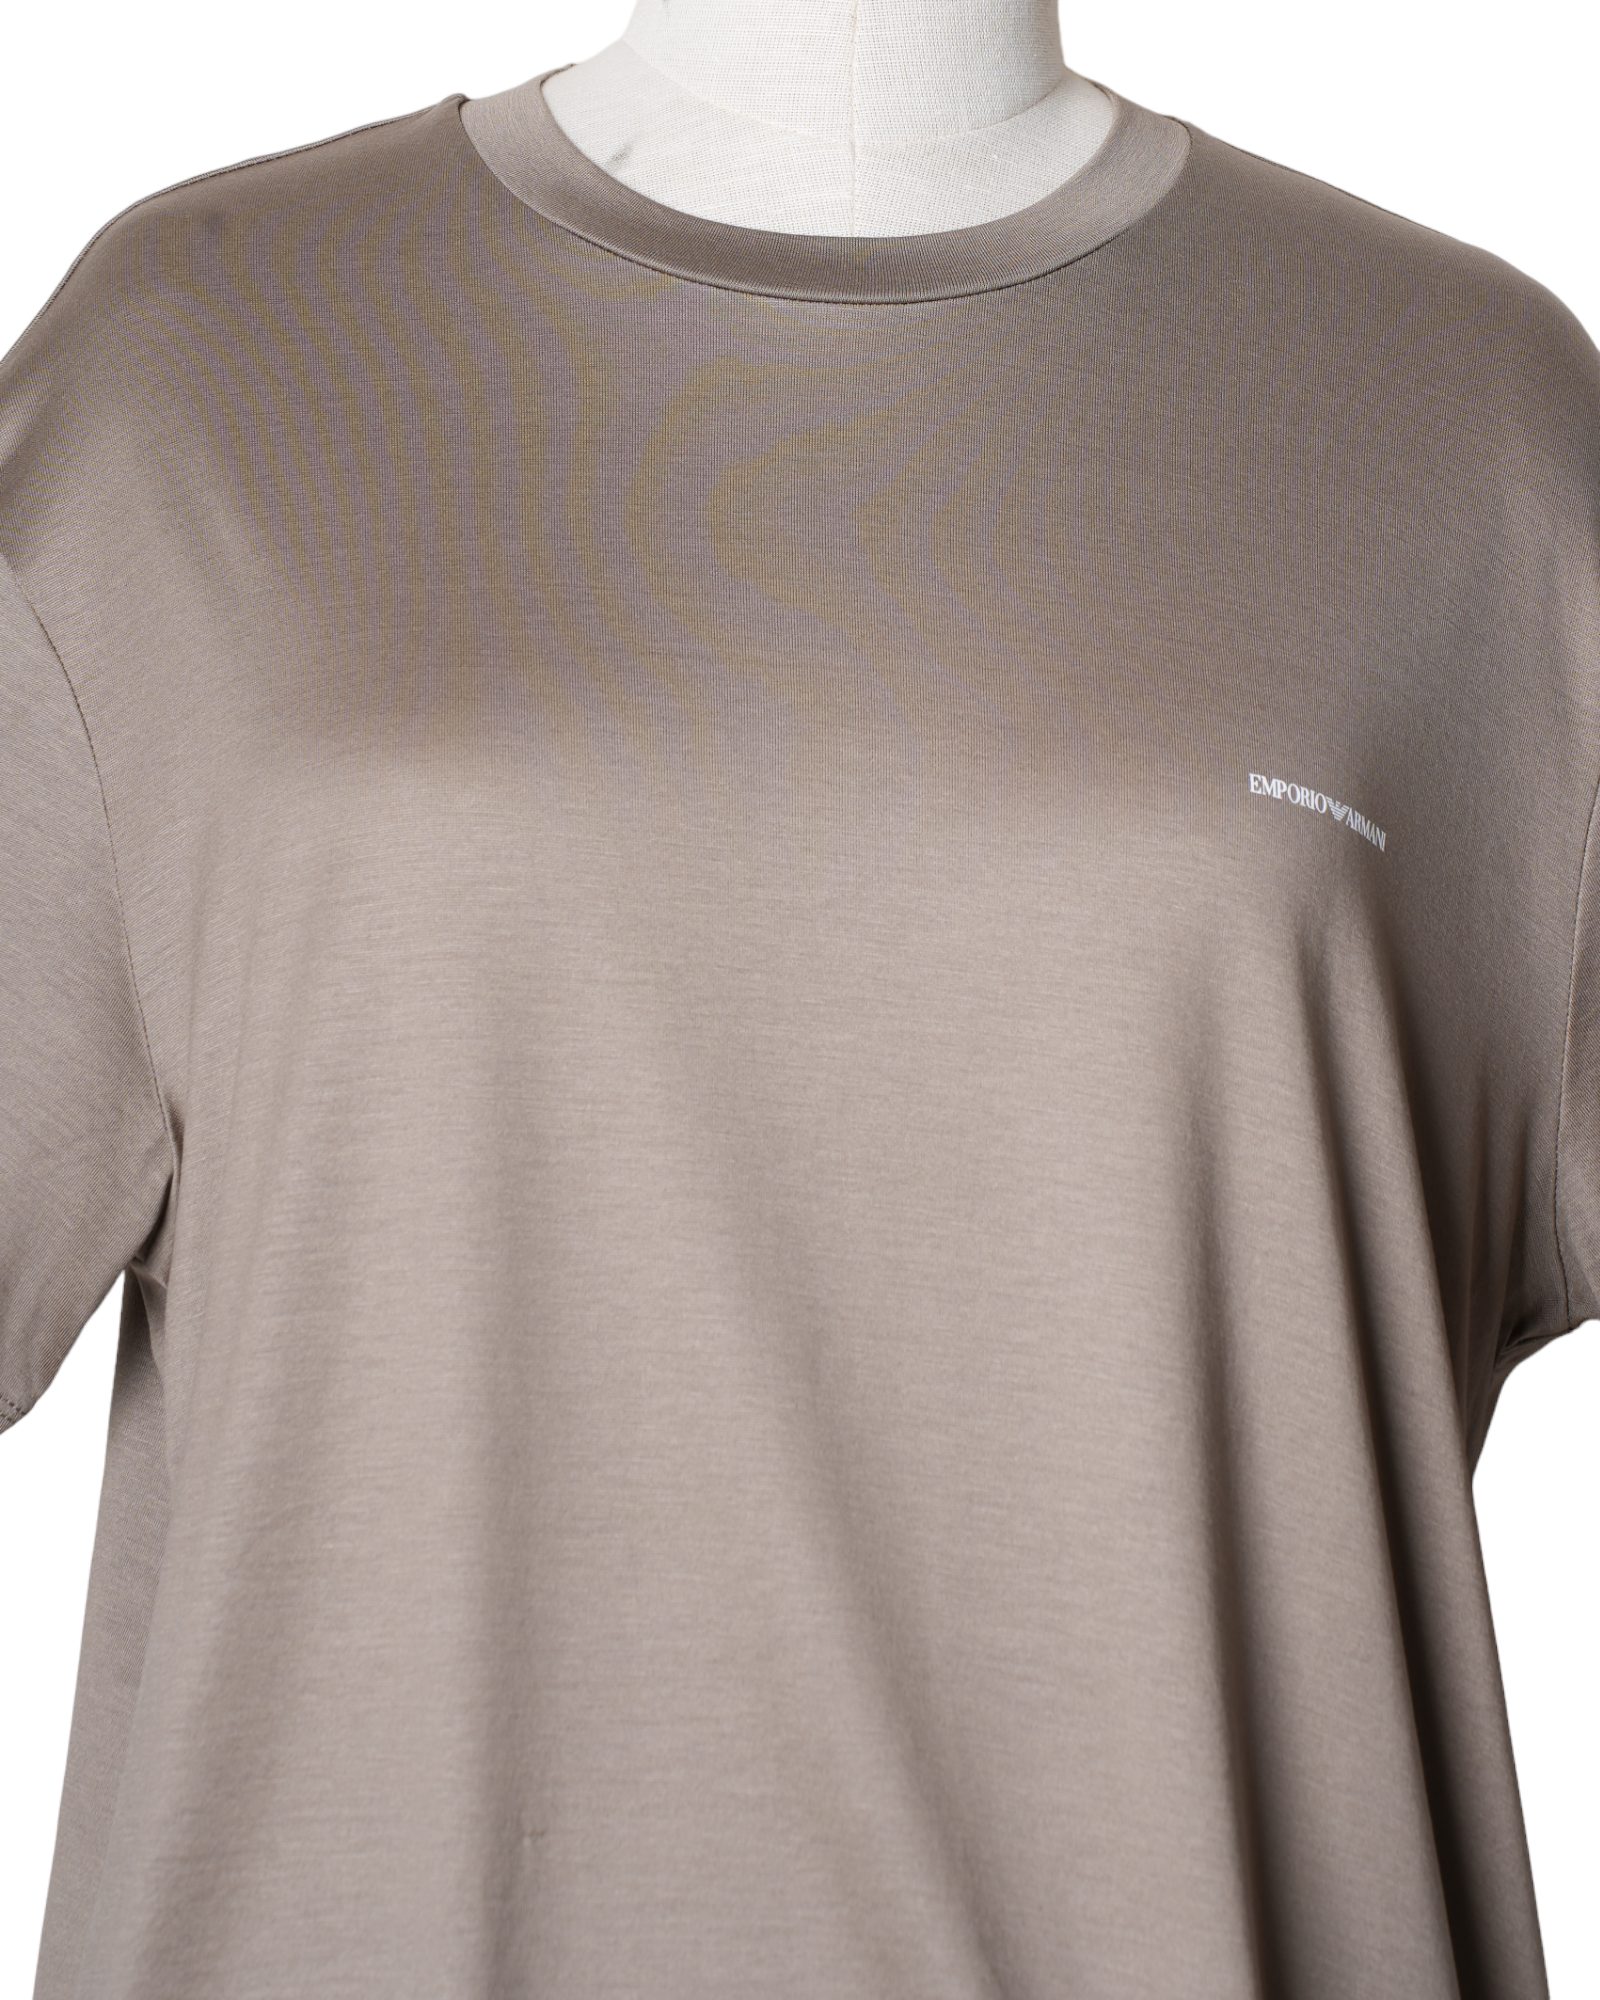 Emporio Armani Grey T-Shirt